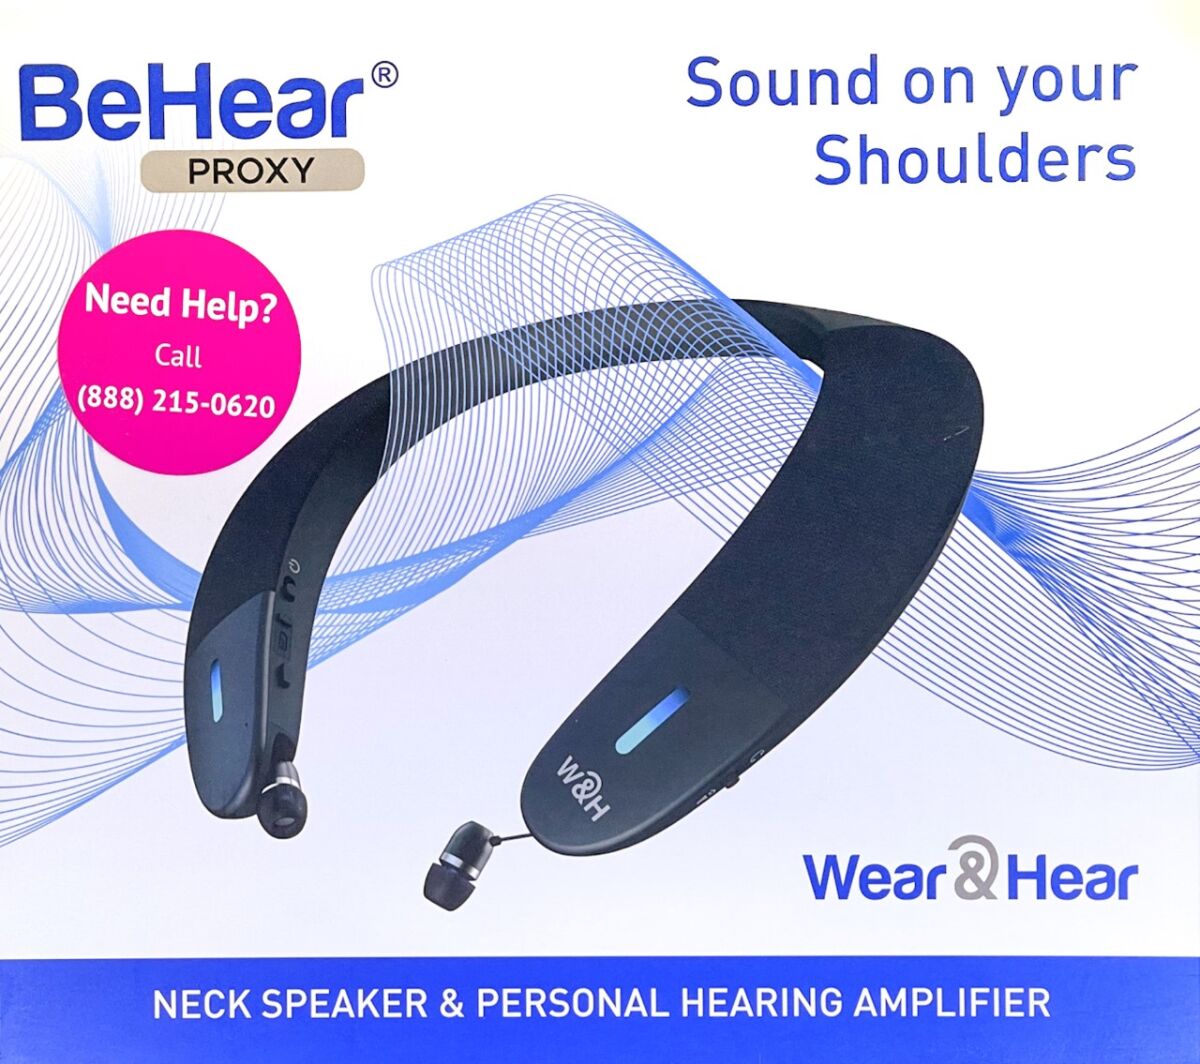 BeHear Proxy Bluetooth neck speaker